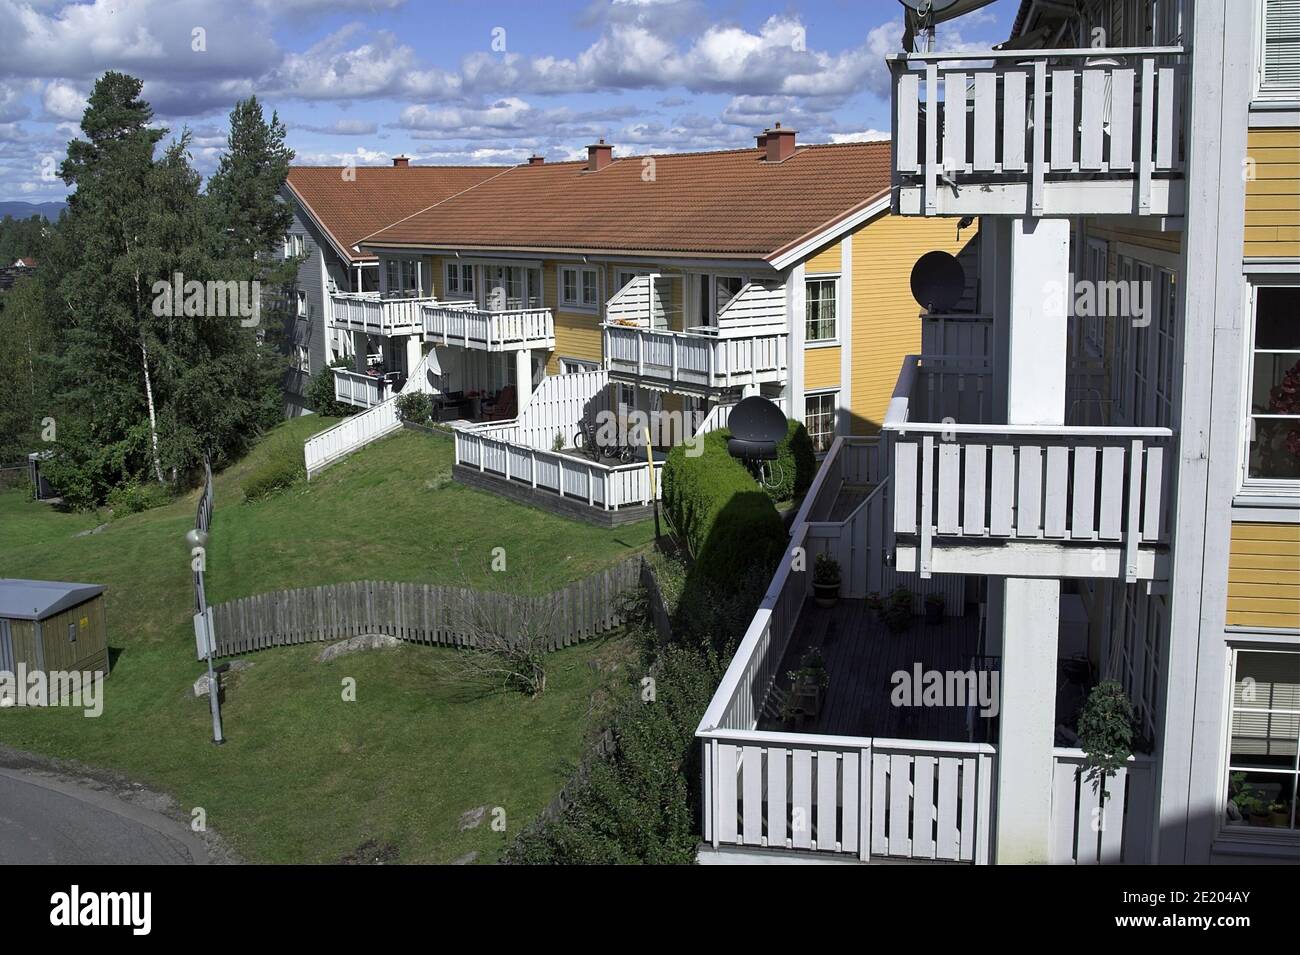 Oslo, Norvegia, Norwegen; UN immobile - case a schiera in legno. Eine Wohnsiedlung - Reihenhäuser aus Holz. Urbanización - casas de madera. Foto Stock